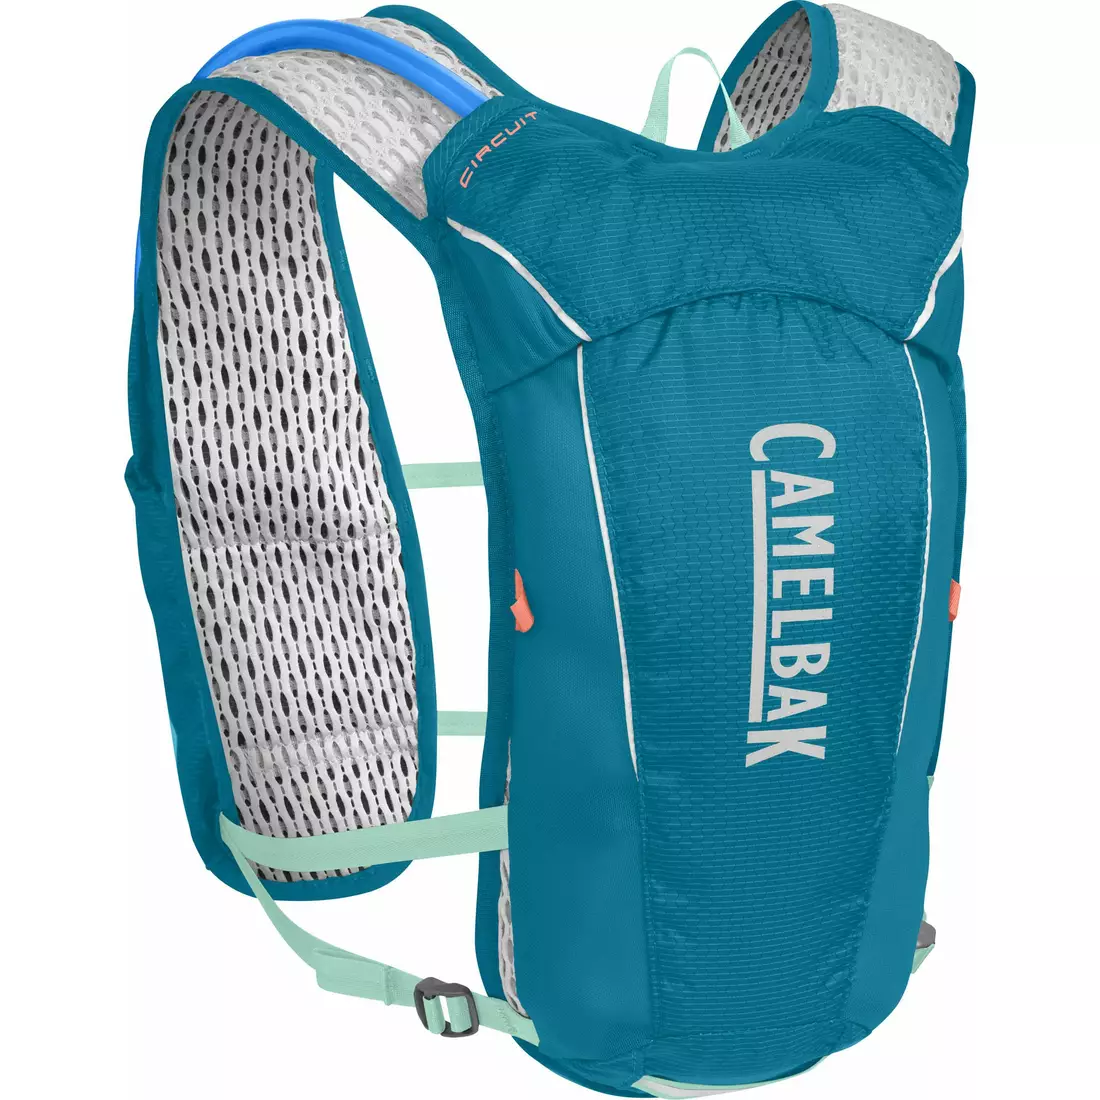 Camelbak SS18 bežecký batoh s vodným vakom Circuit Vest 50oz /1,5L Teal/Ice Green 1138403000